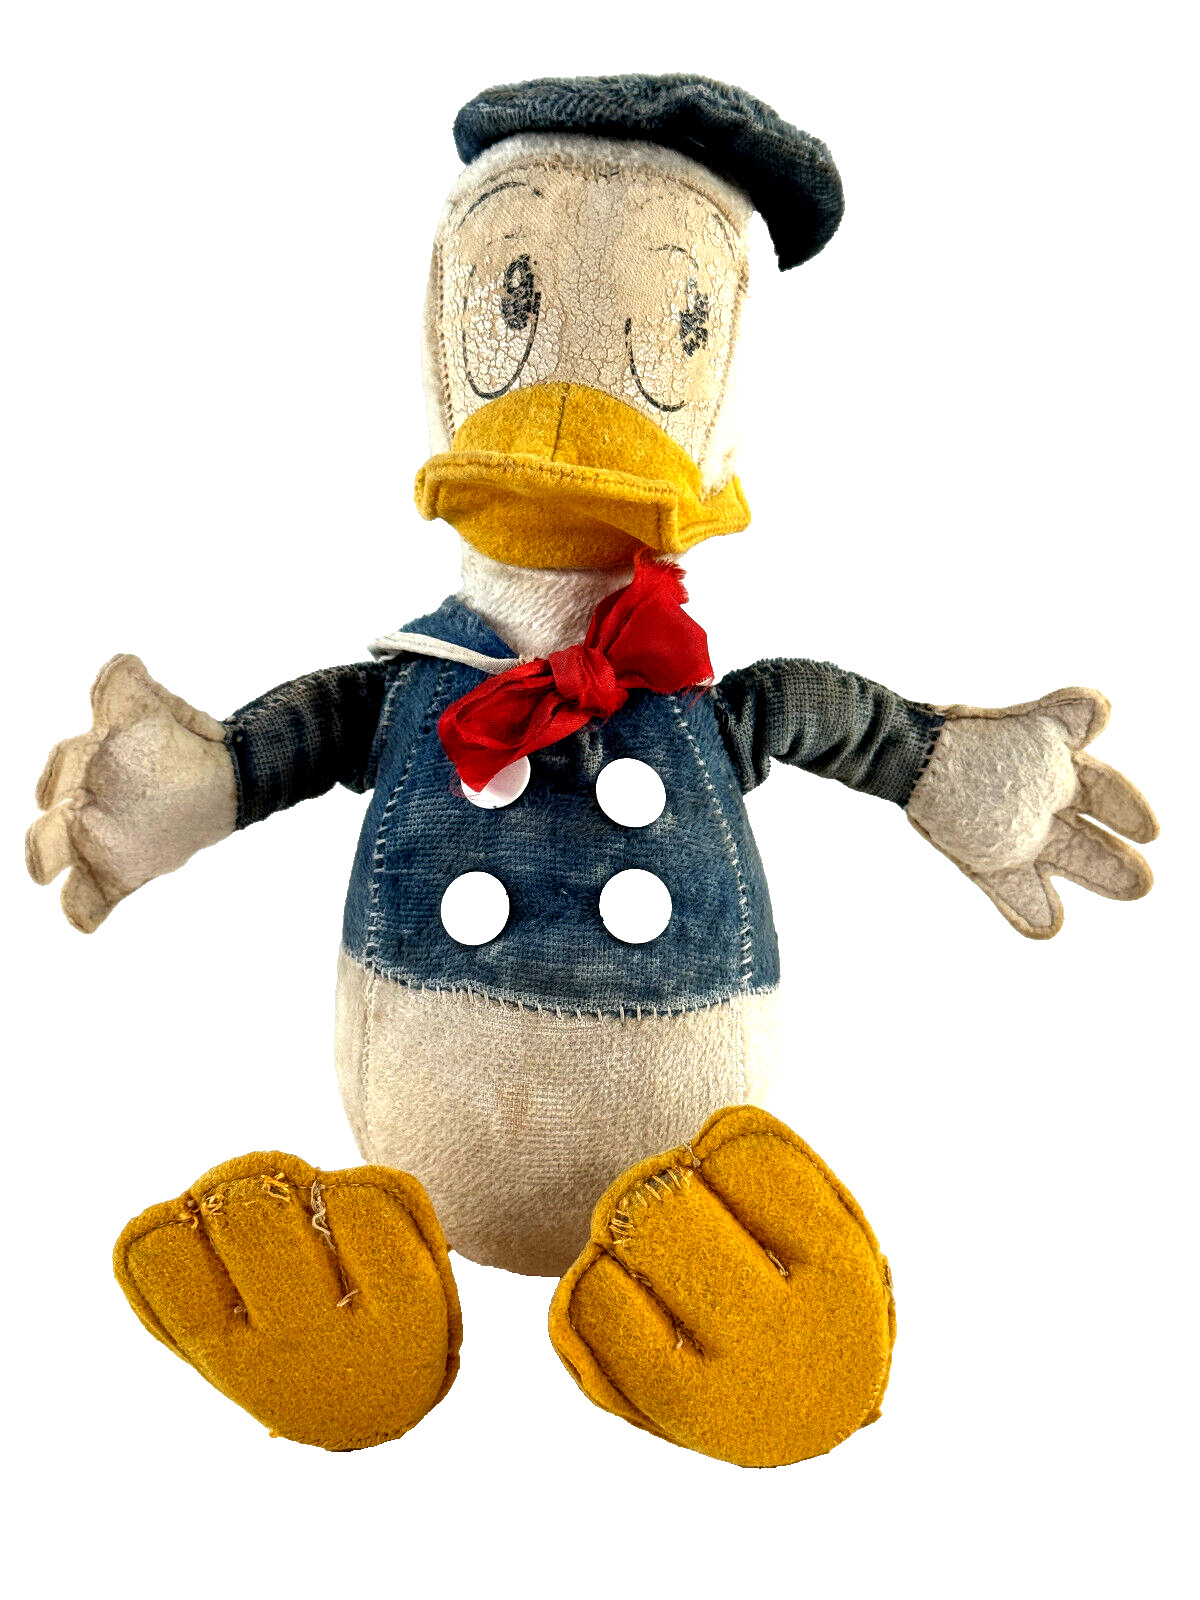 Antique 1950s Gund Walt Disney Donald Duck Plush Stuffed Animal NICE